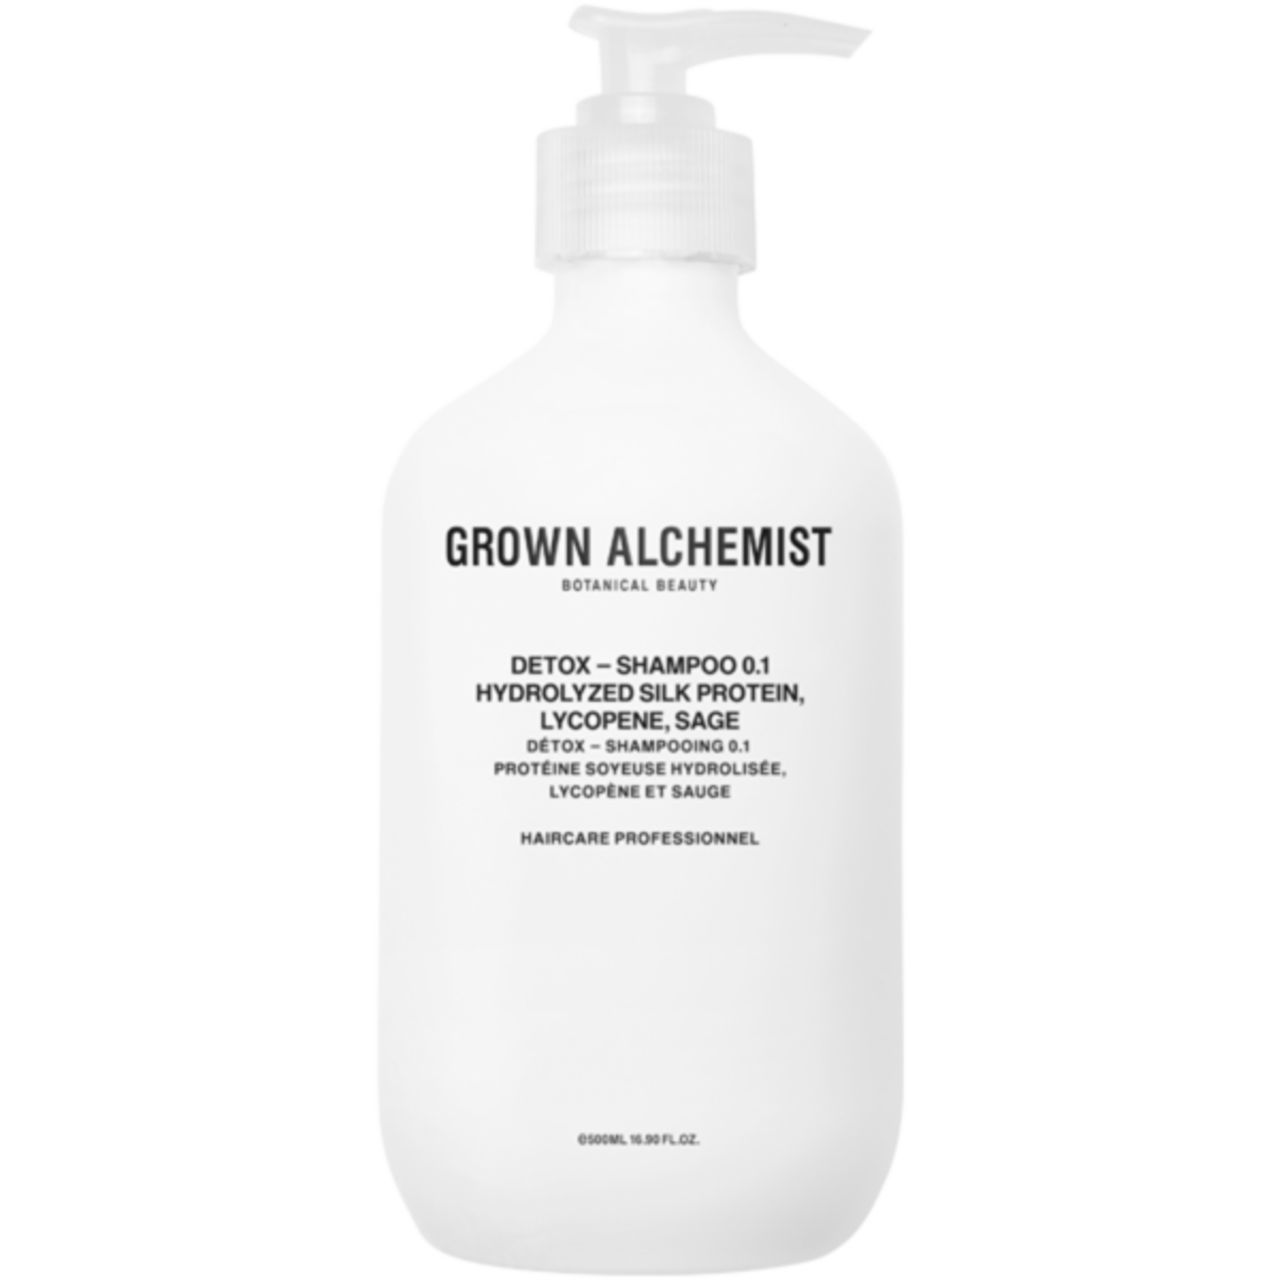 Grown Alchemist, Detox Shampoo 0.1